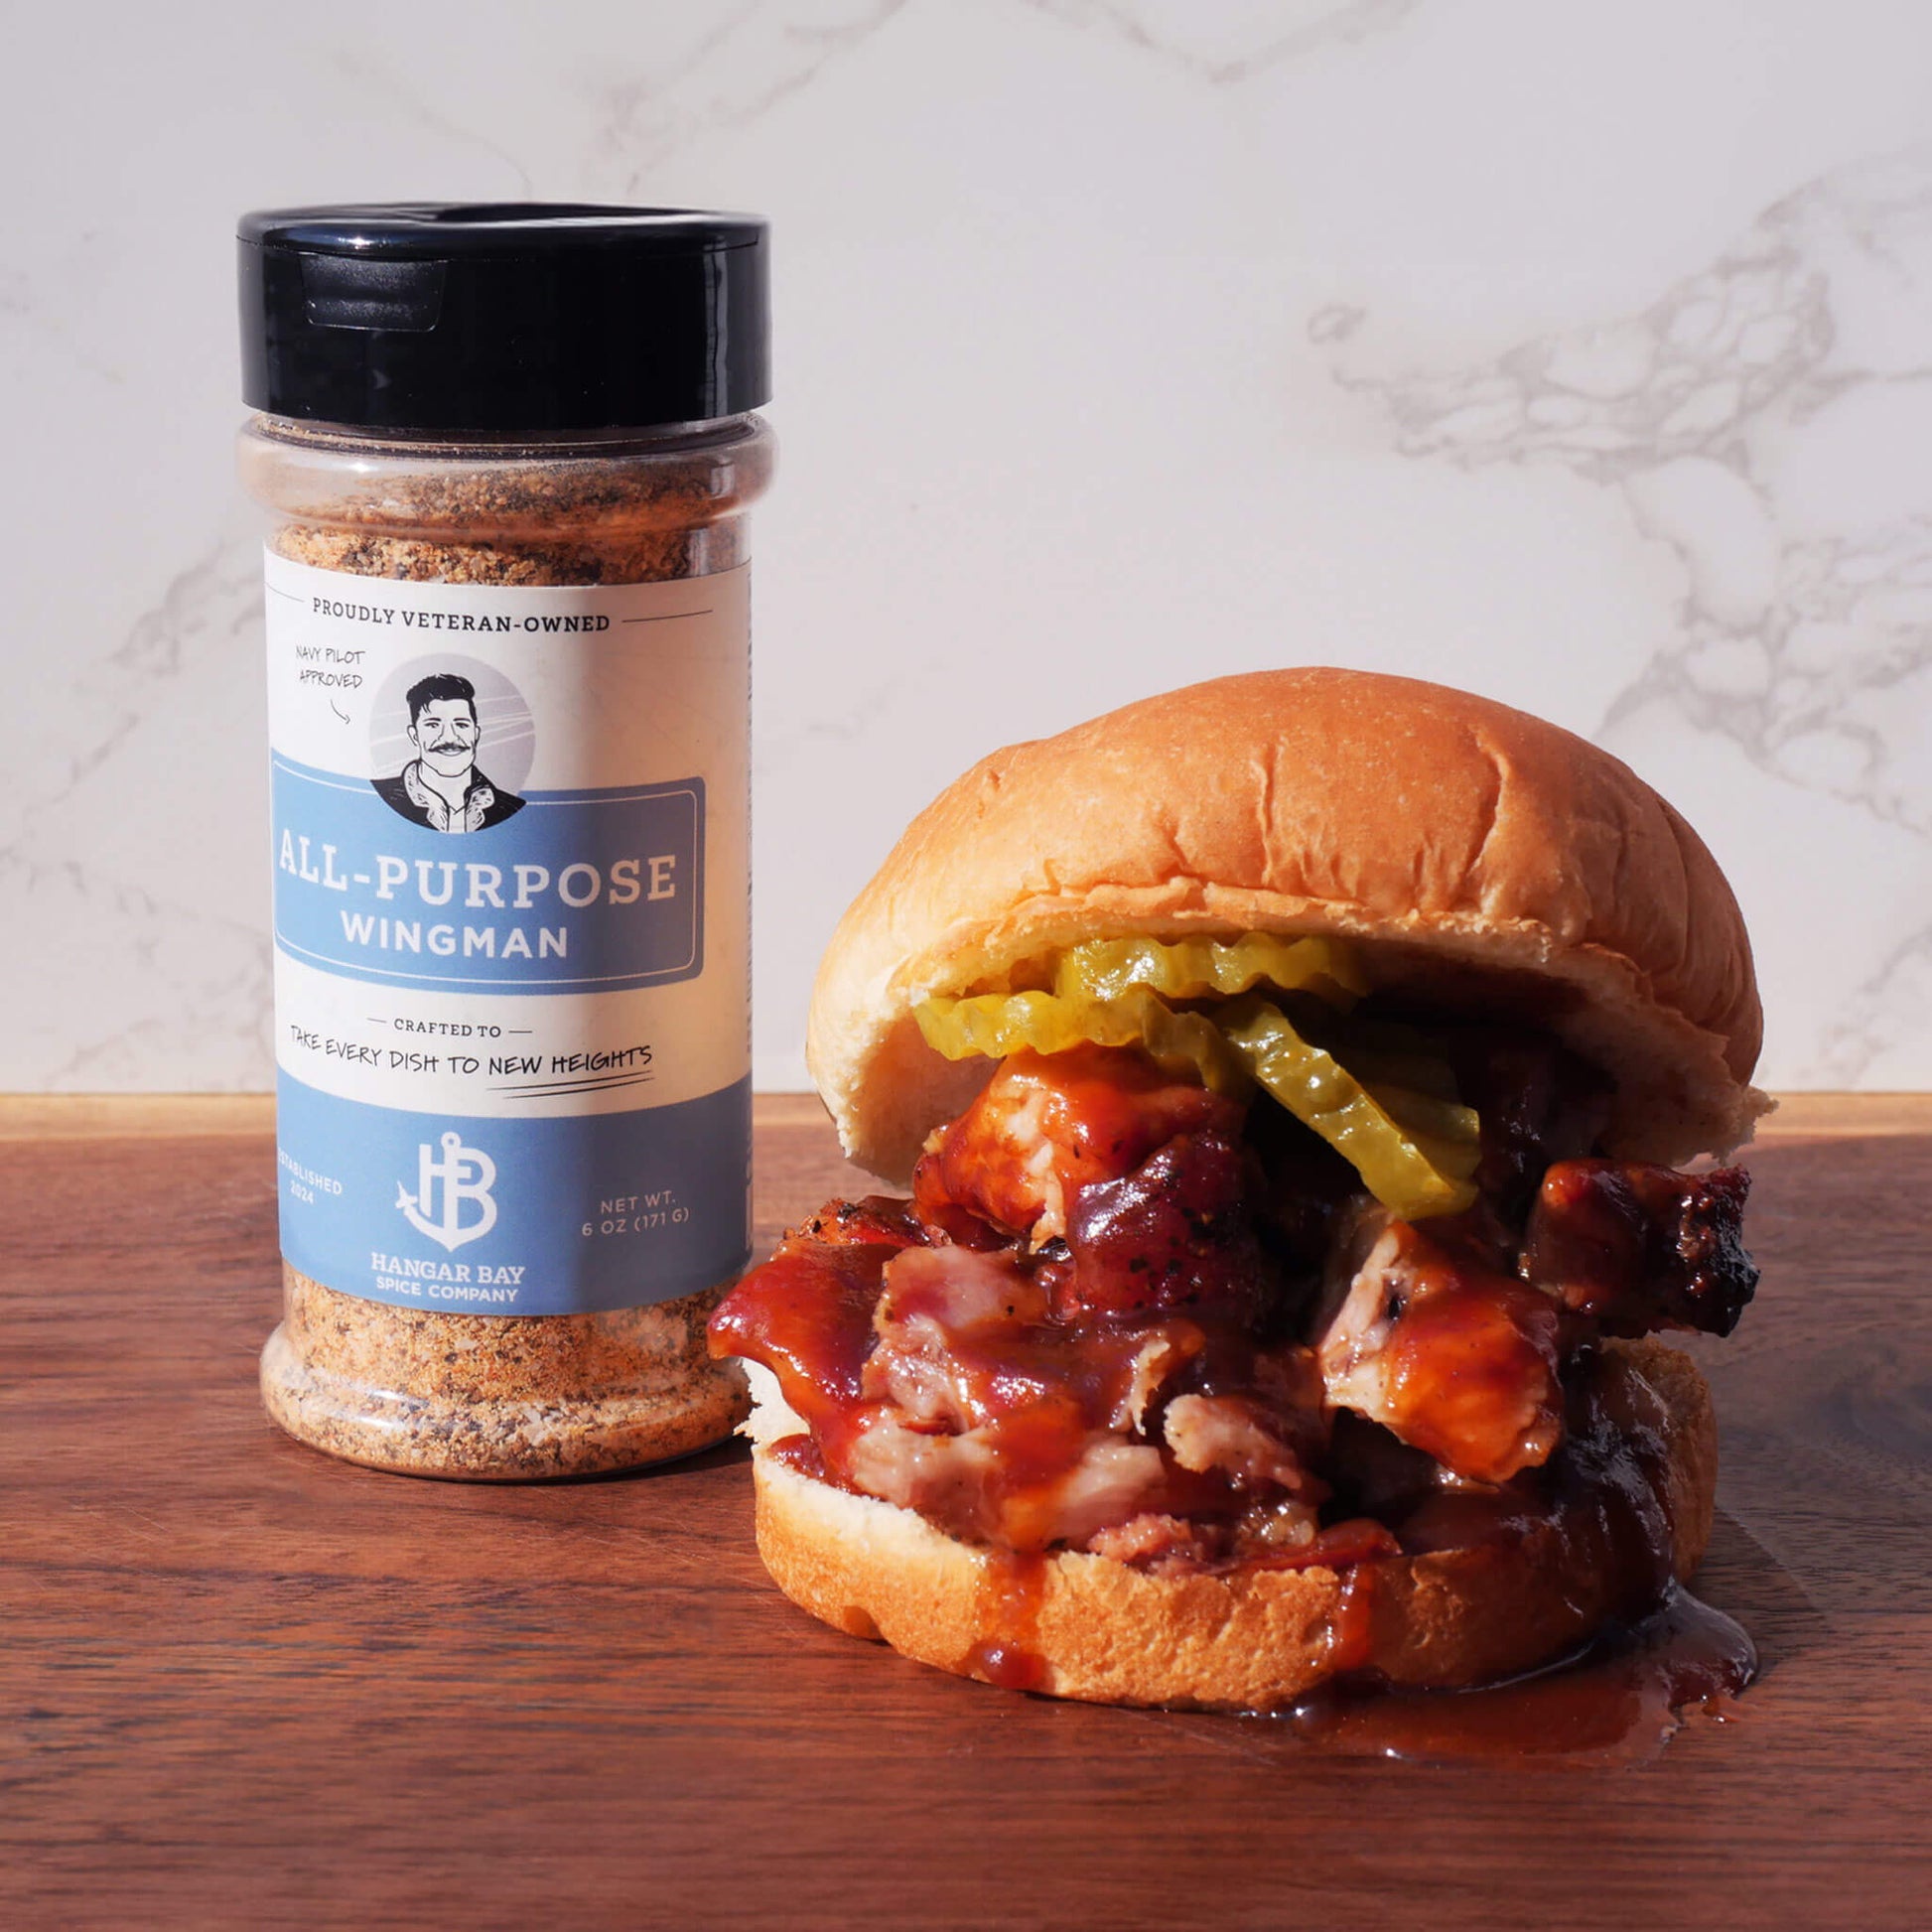 Hangar Bay Spice, Wingman All-Purpose Seasoning with brisket sandwich on hamburger bun with sauce and pickles